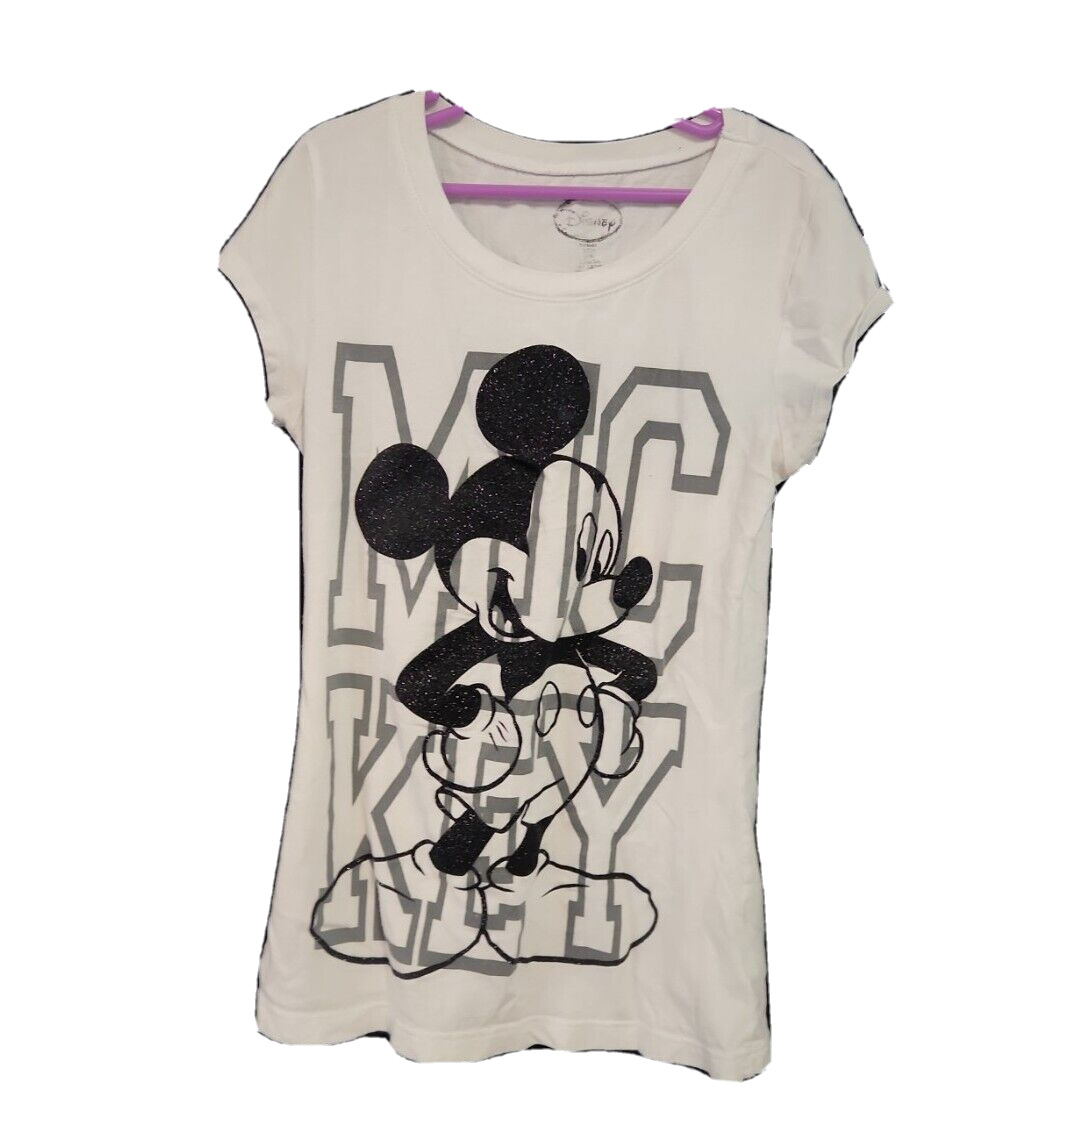 Disneys Youth Mickey Mouse Tee Shirt